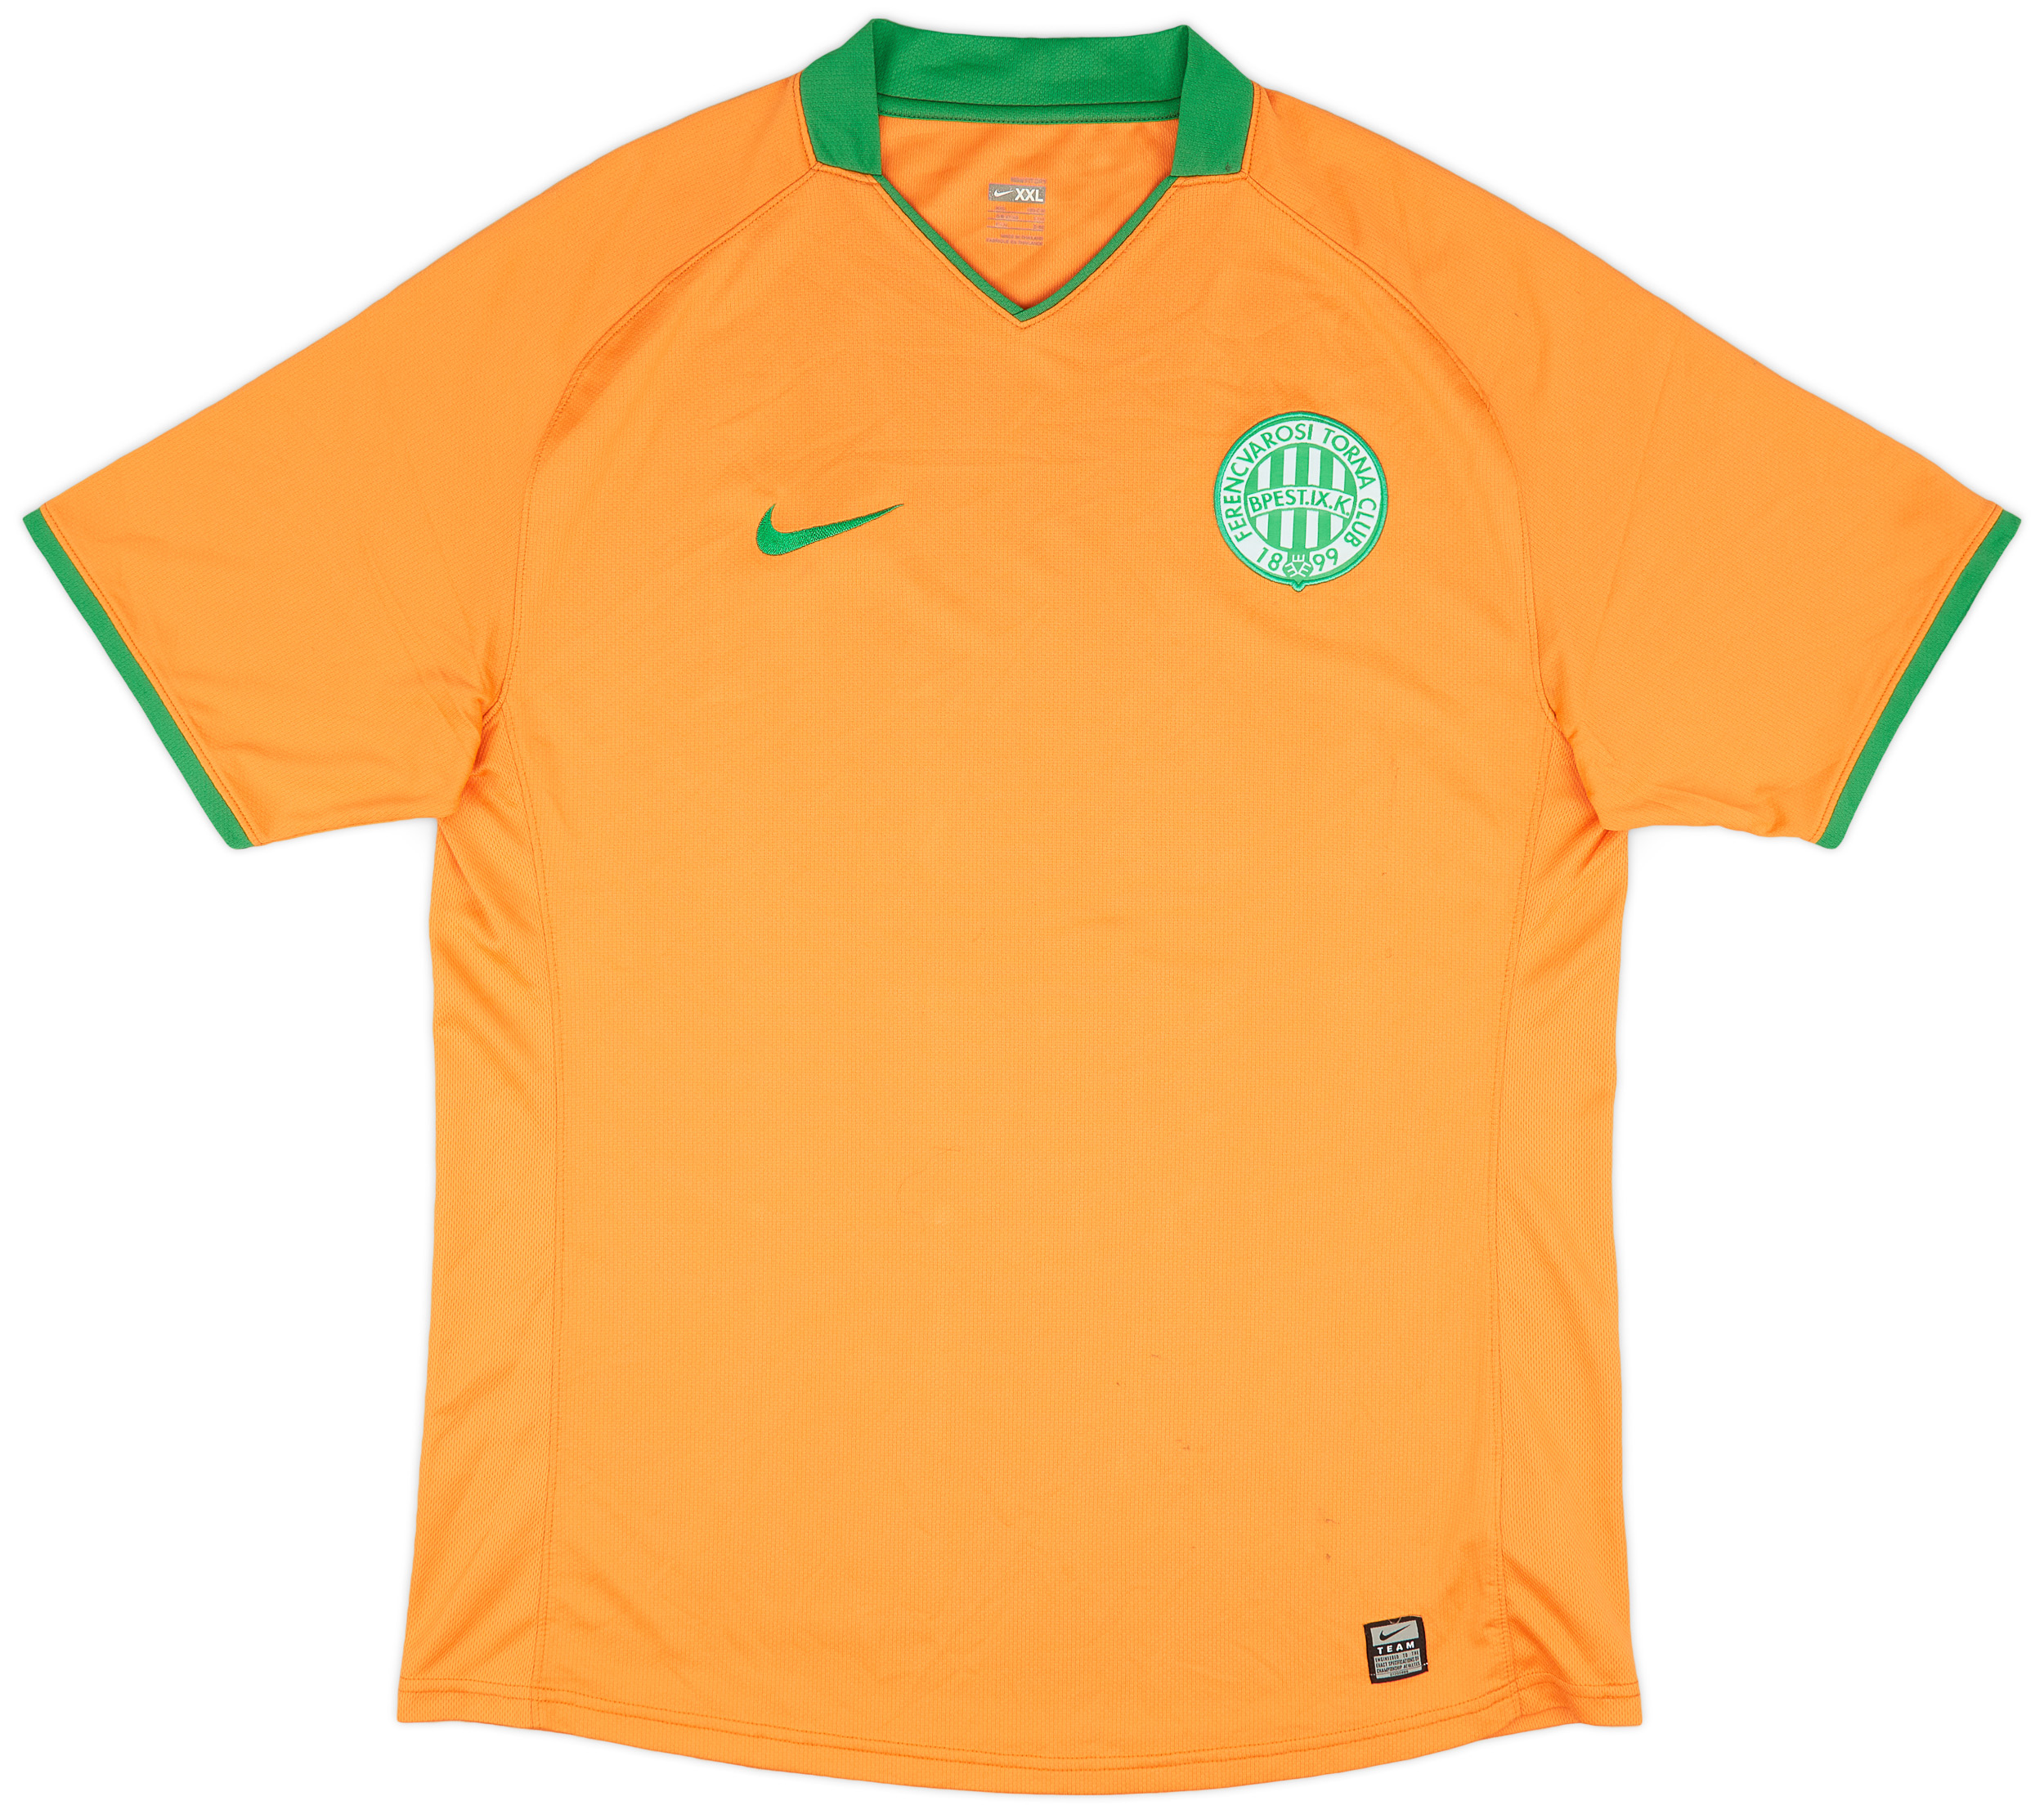 Ferencvaros  Away shirt (Original)